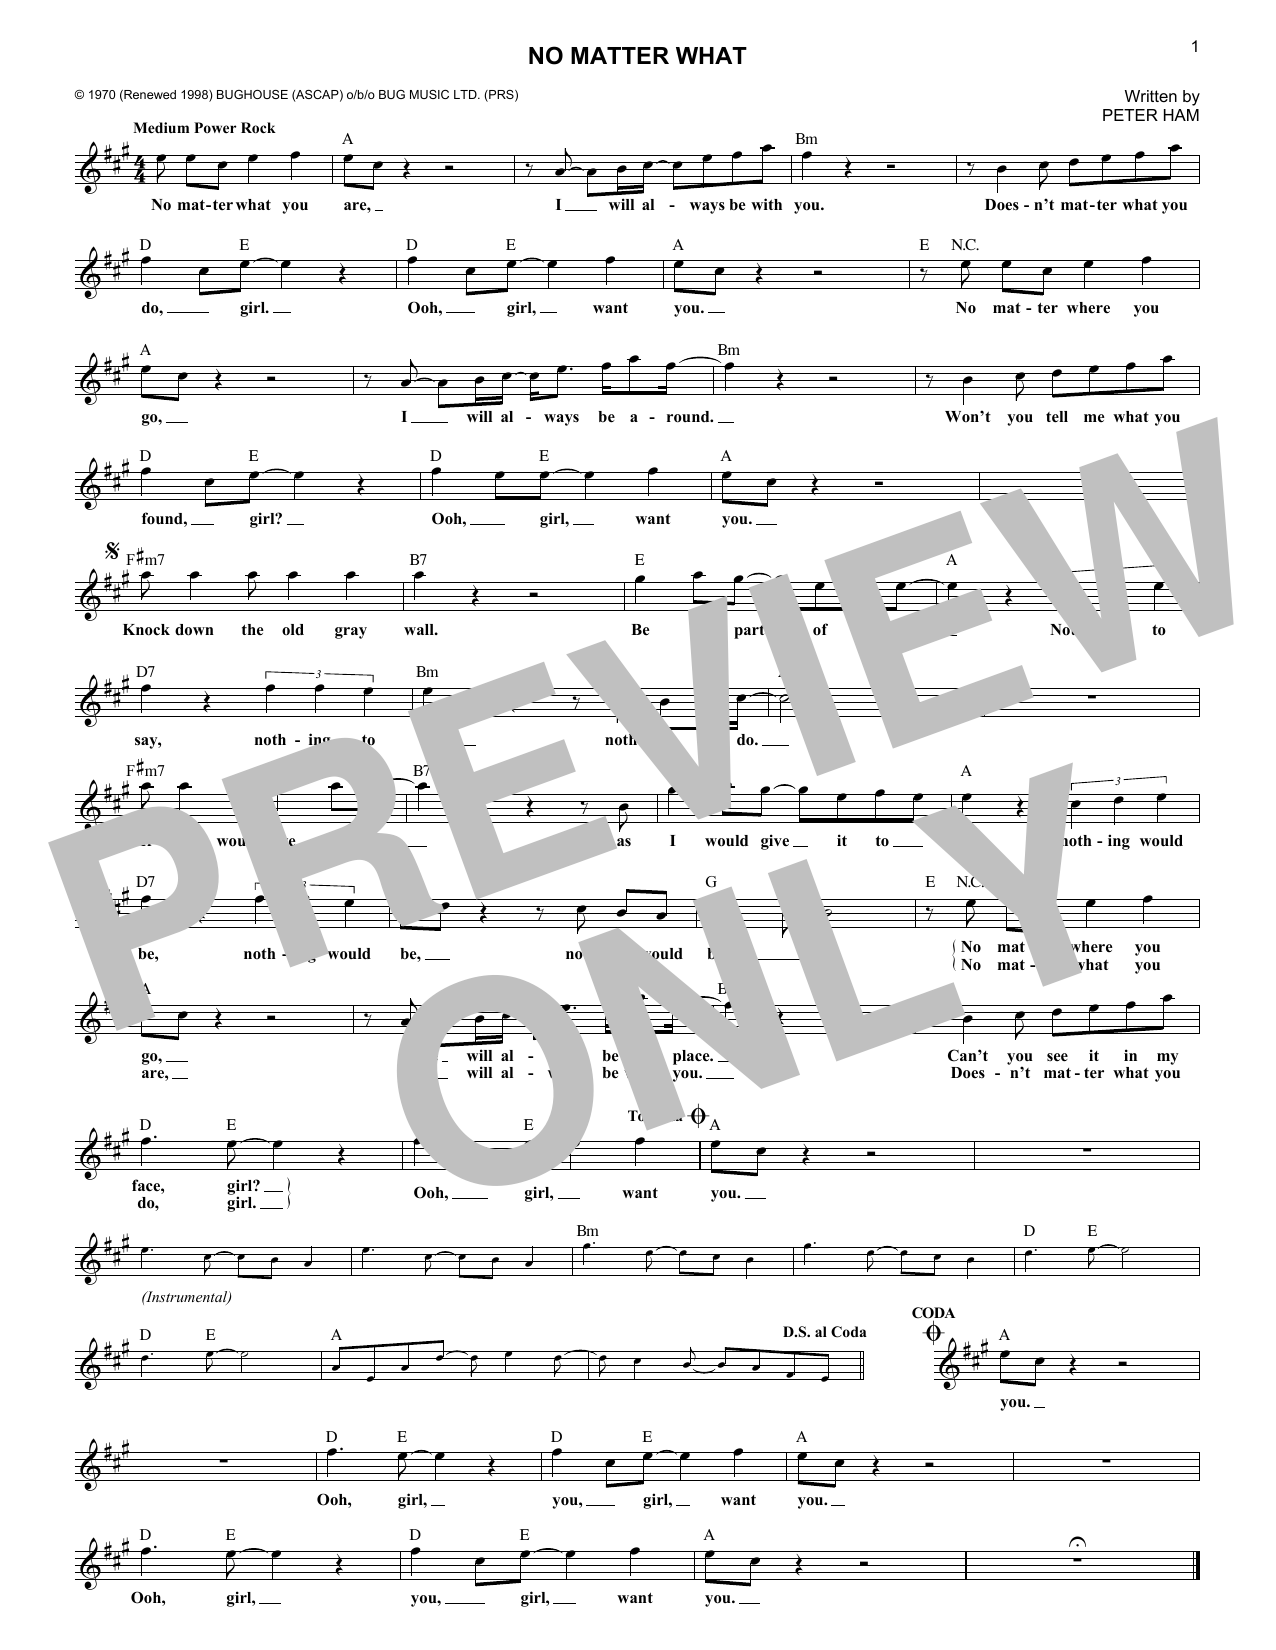 Peter Ham No Matter What Sheet Music Notes & Chords for Melody Line, Lyrics & Chords - Download or Print PDF